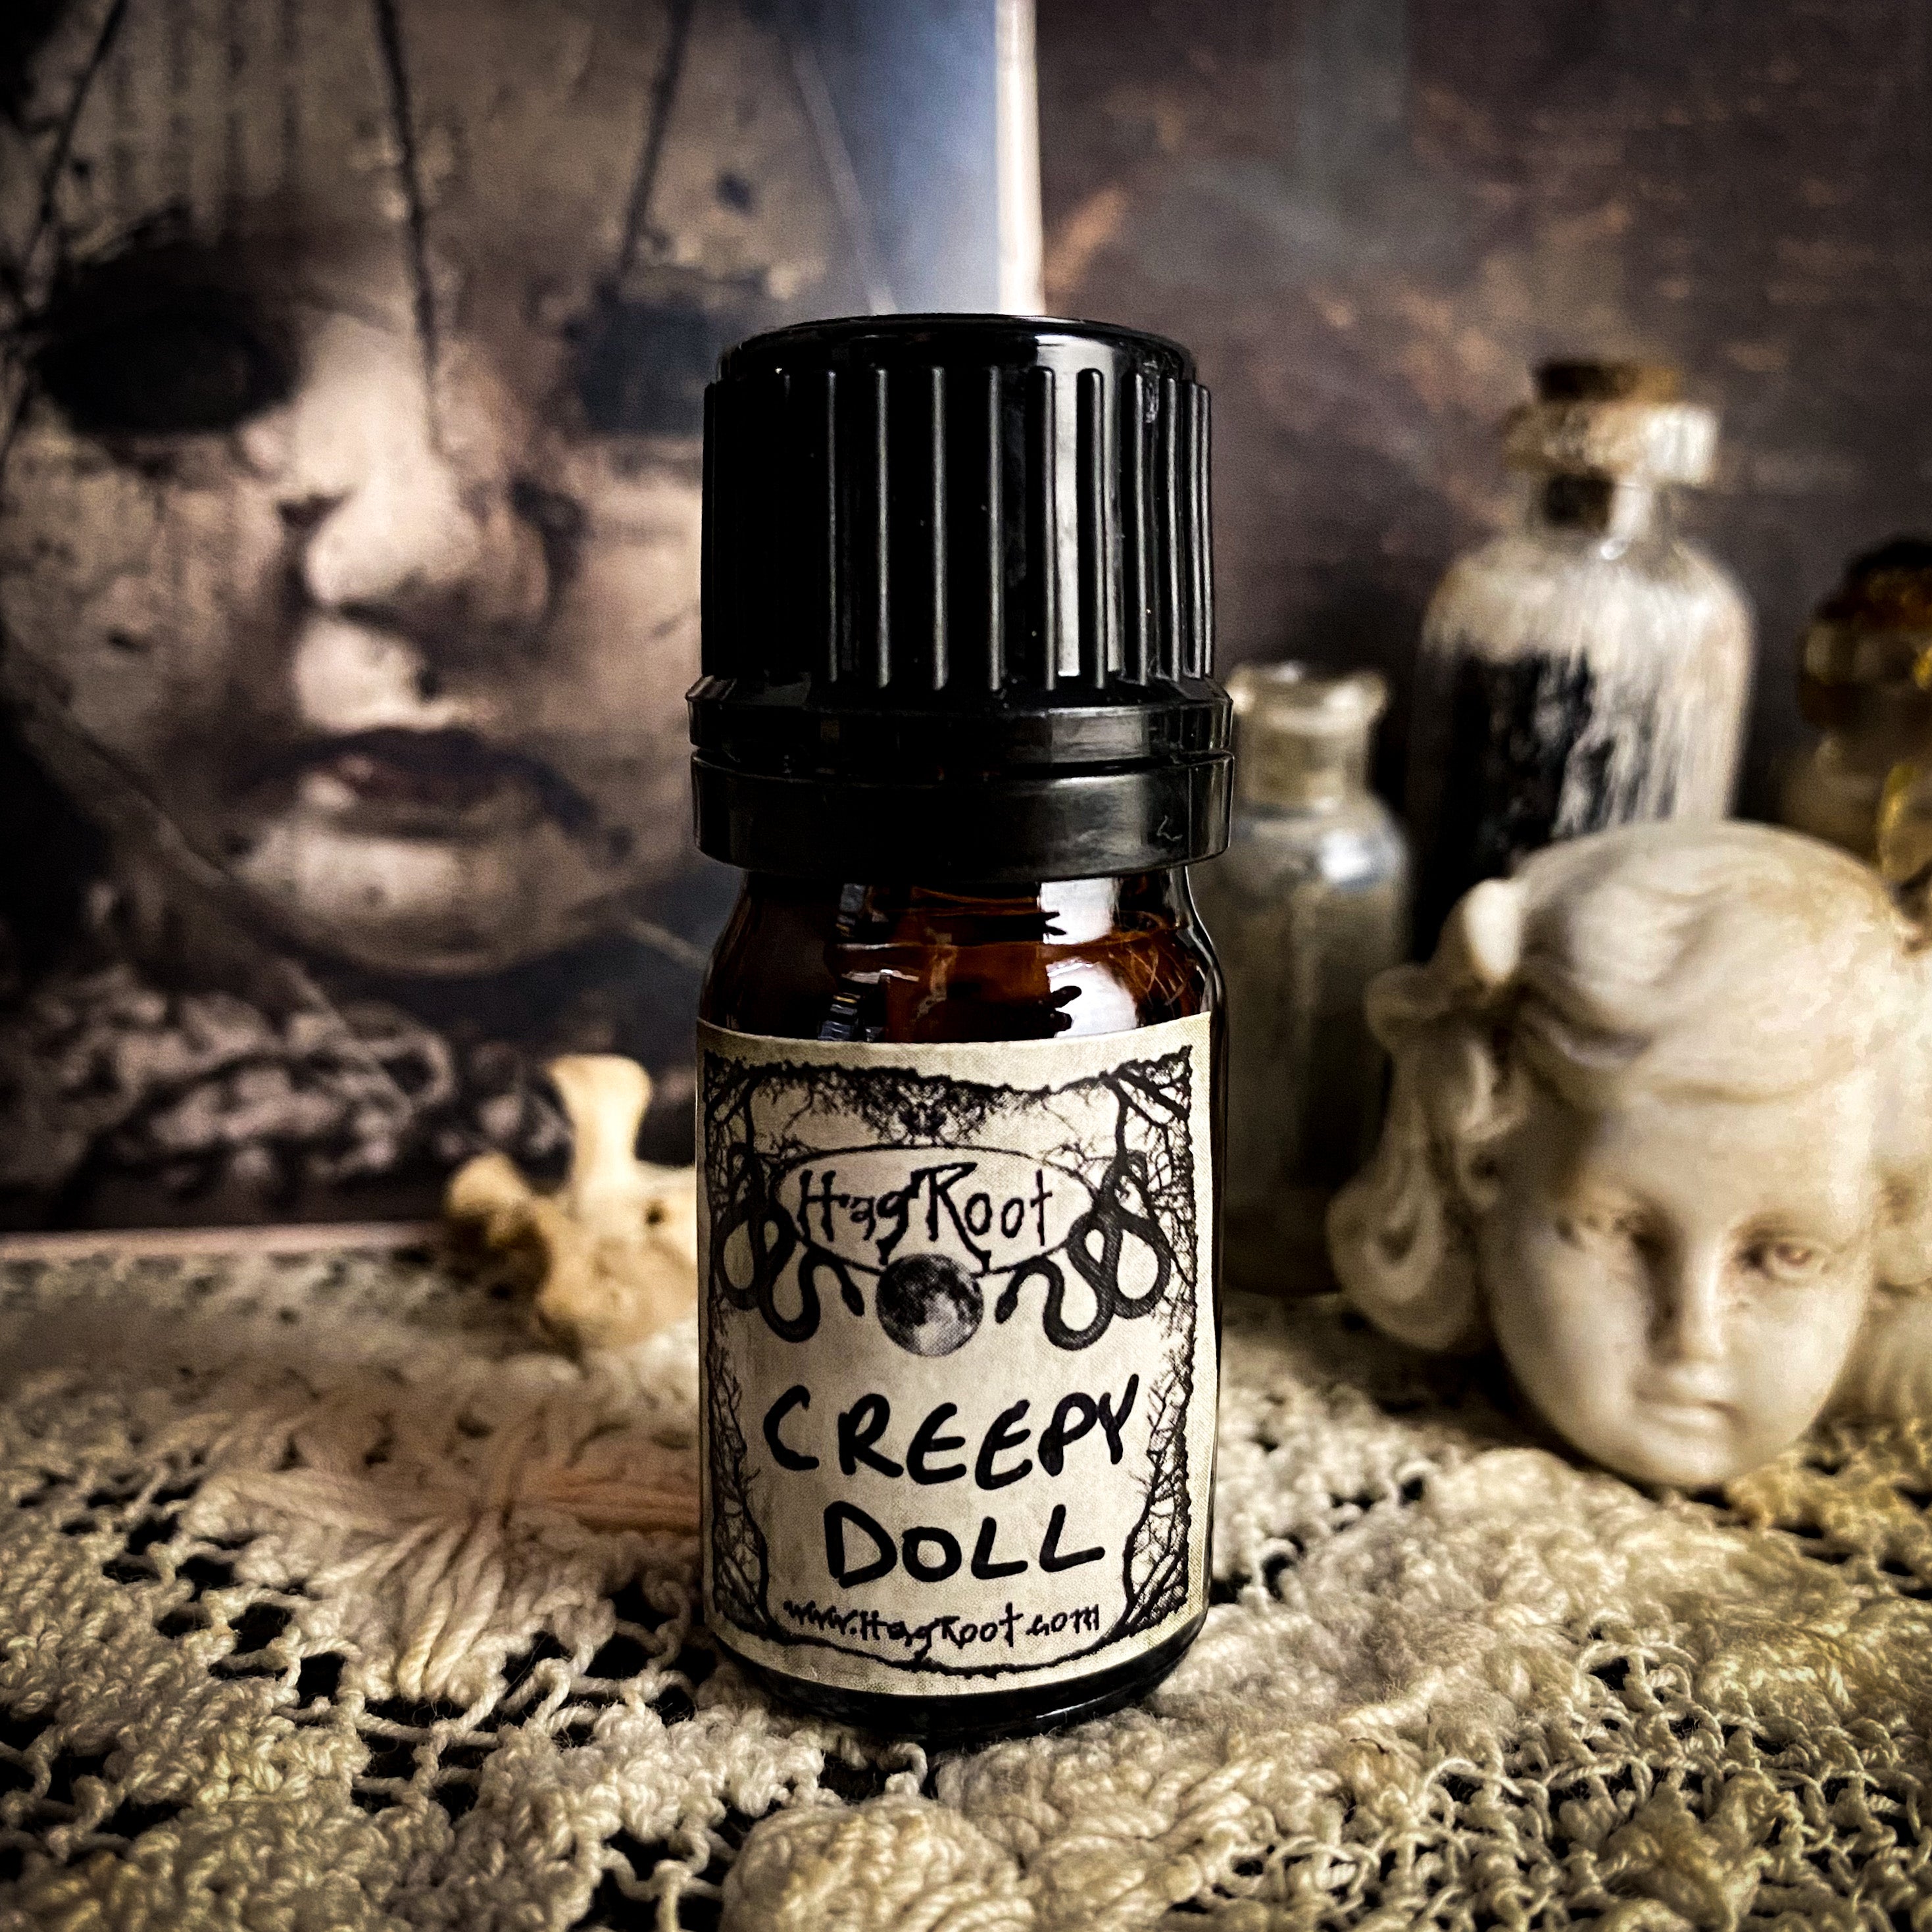 CREEPY DOLL-(Spun Sugar, Vanilla, Cardamom, Vetiver, Cedar, Frankincense)-Perfume, Cologne, Anointing, Ritual Oil